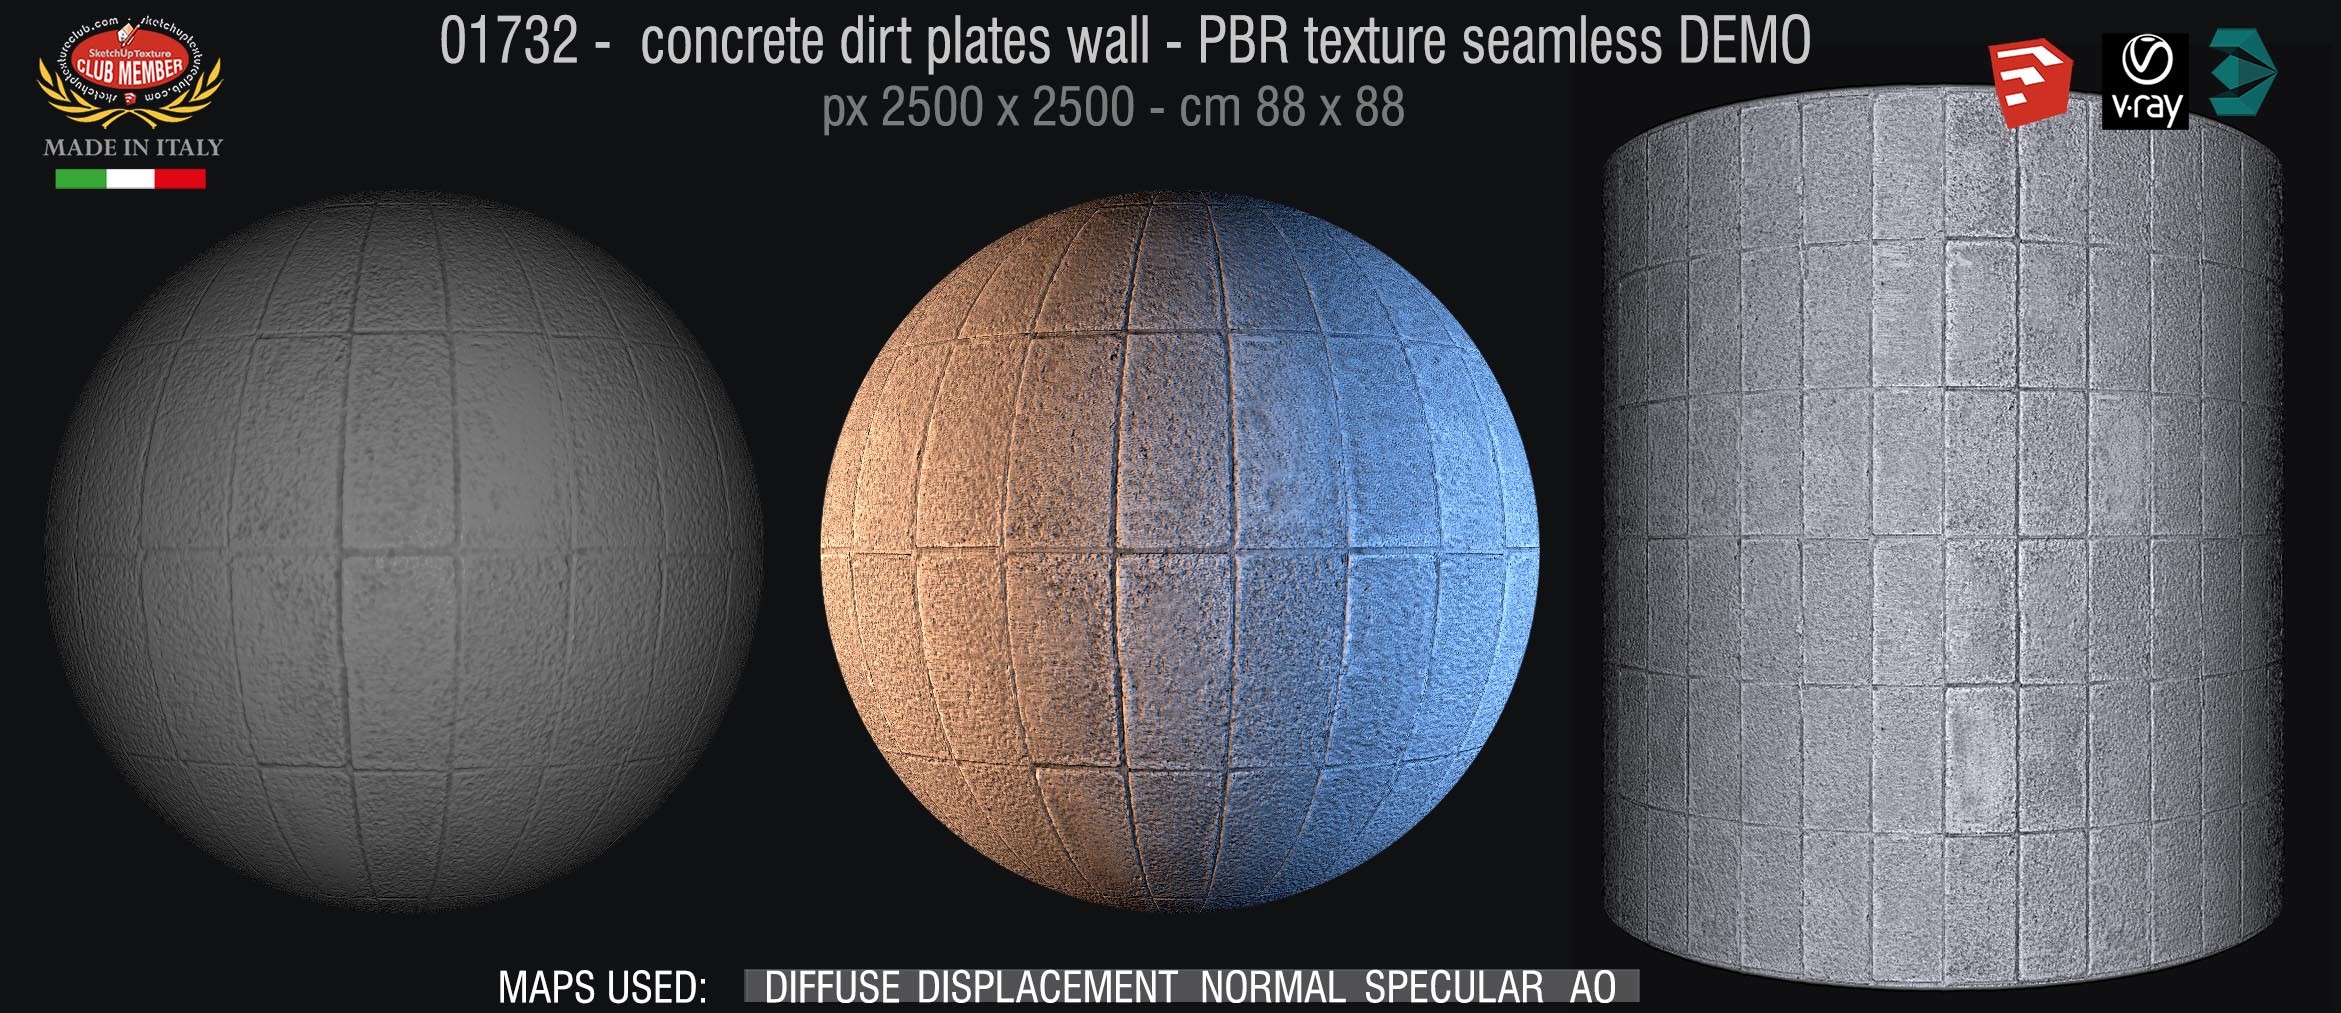 01732 concrete dirt plates wall PBR texture seamless DEMO